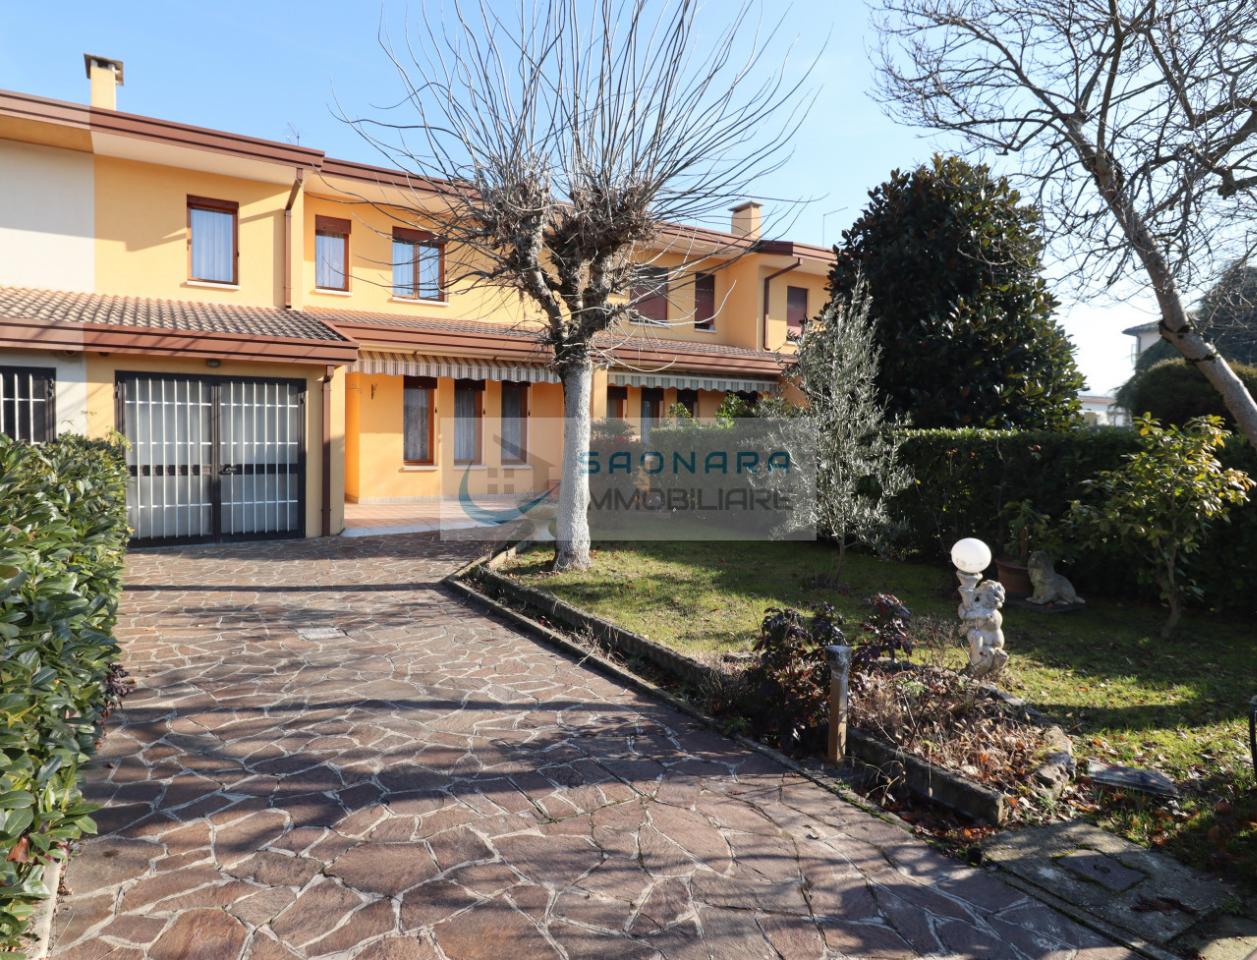 Villa a schiera in vendita a Saonara